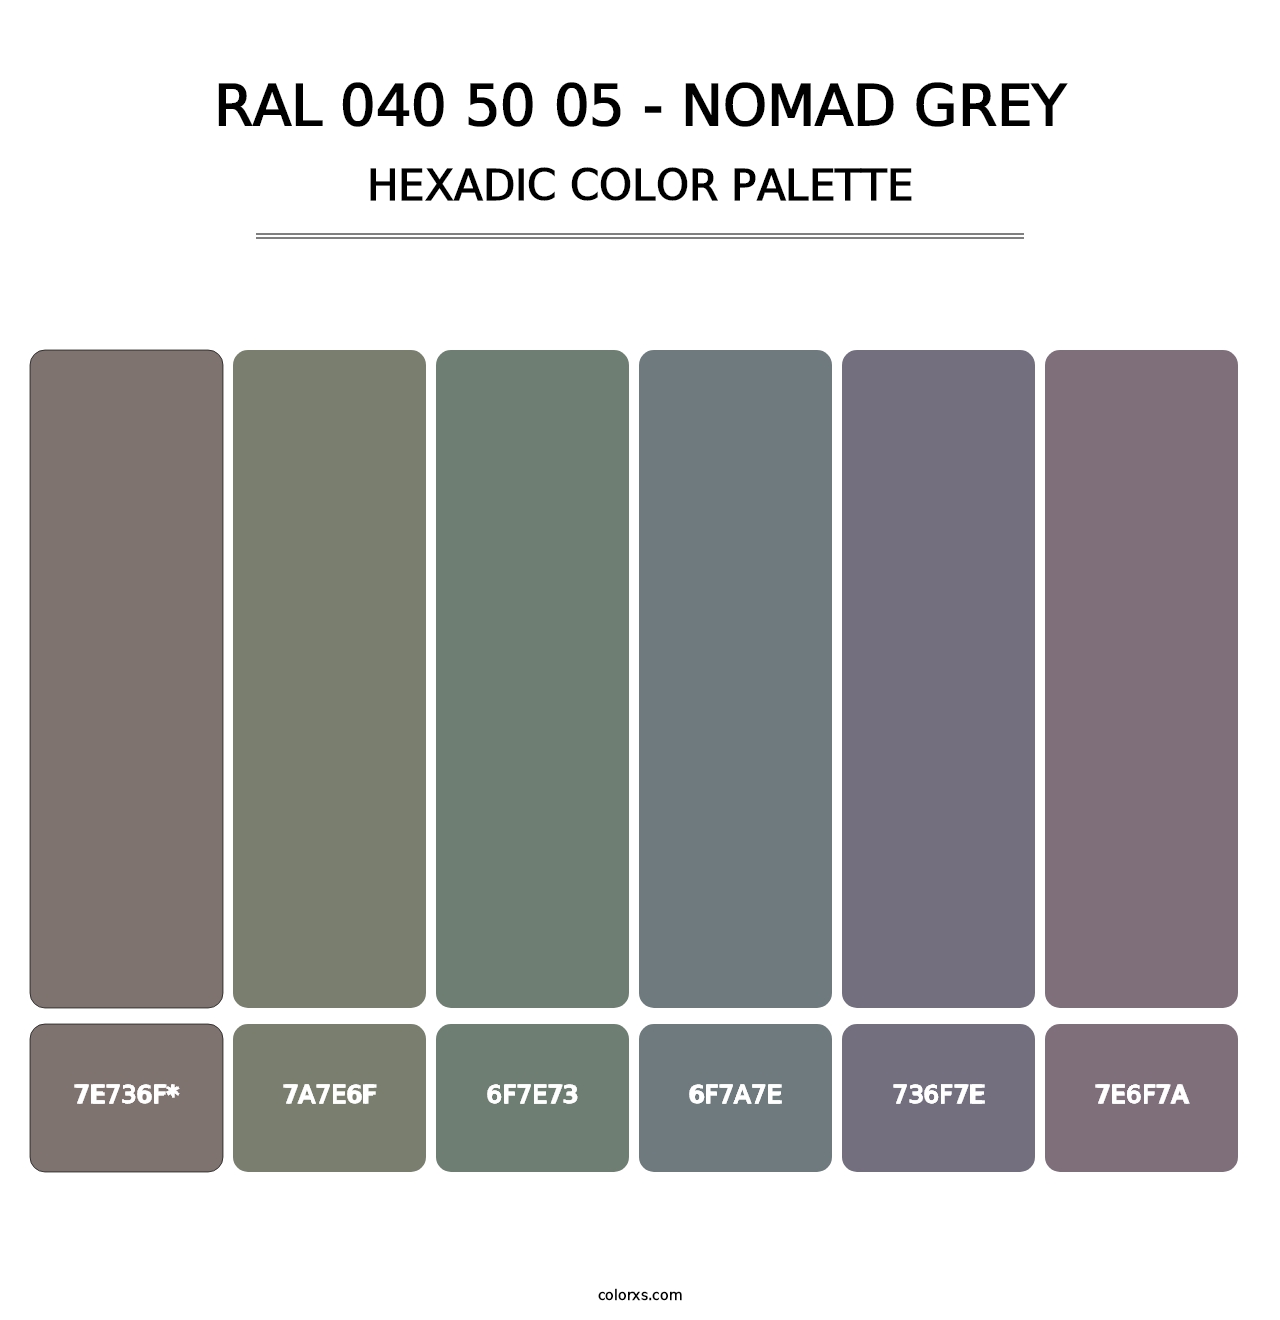 RAL 040 50 05 - Nomad Grey - Hexadic Color Palette